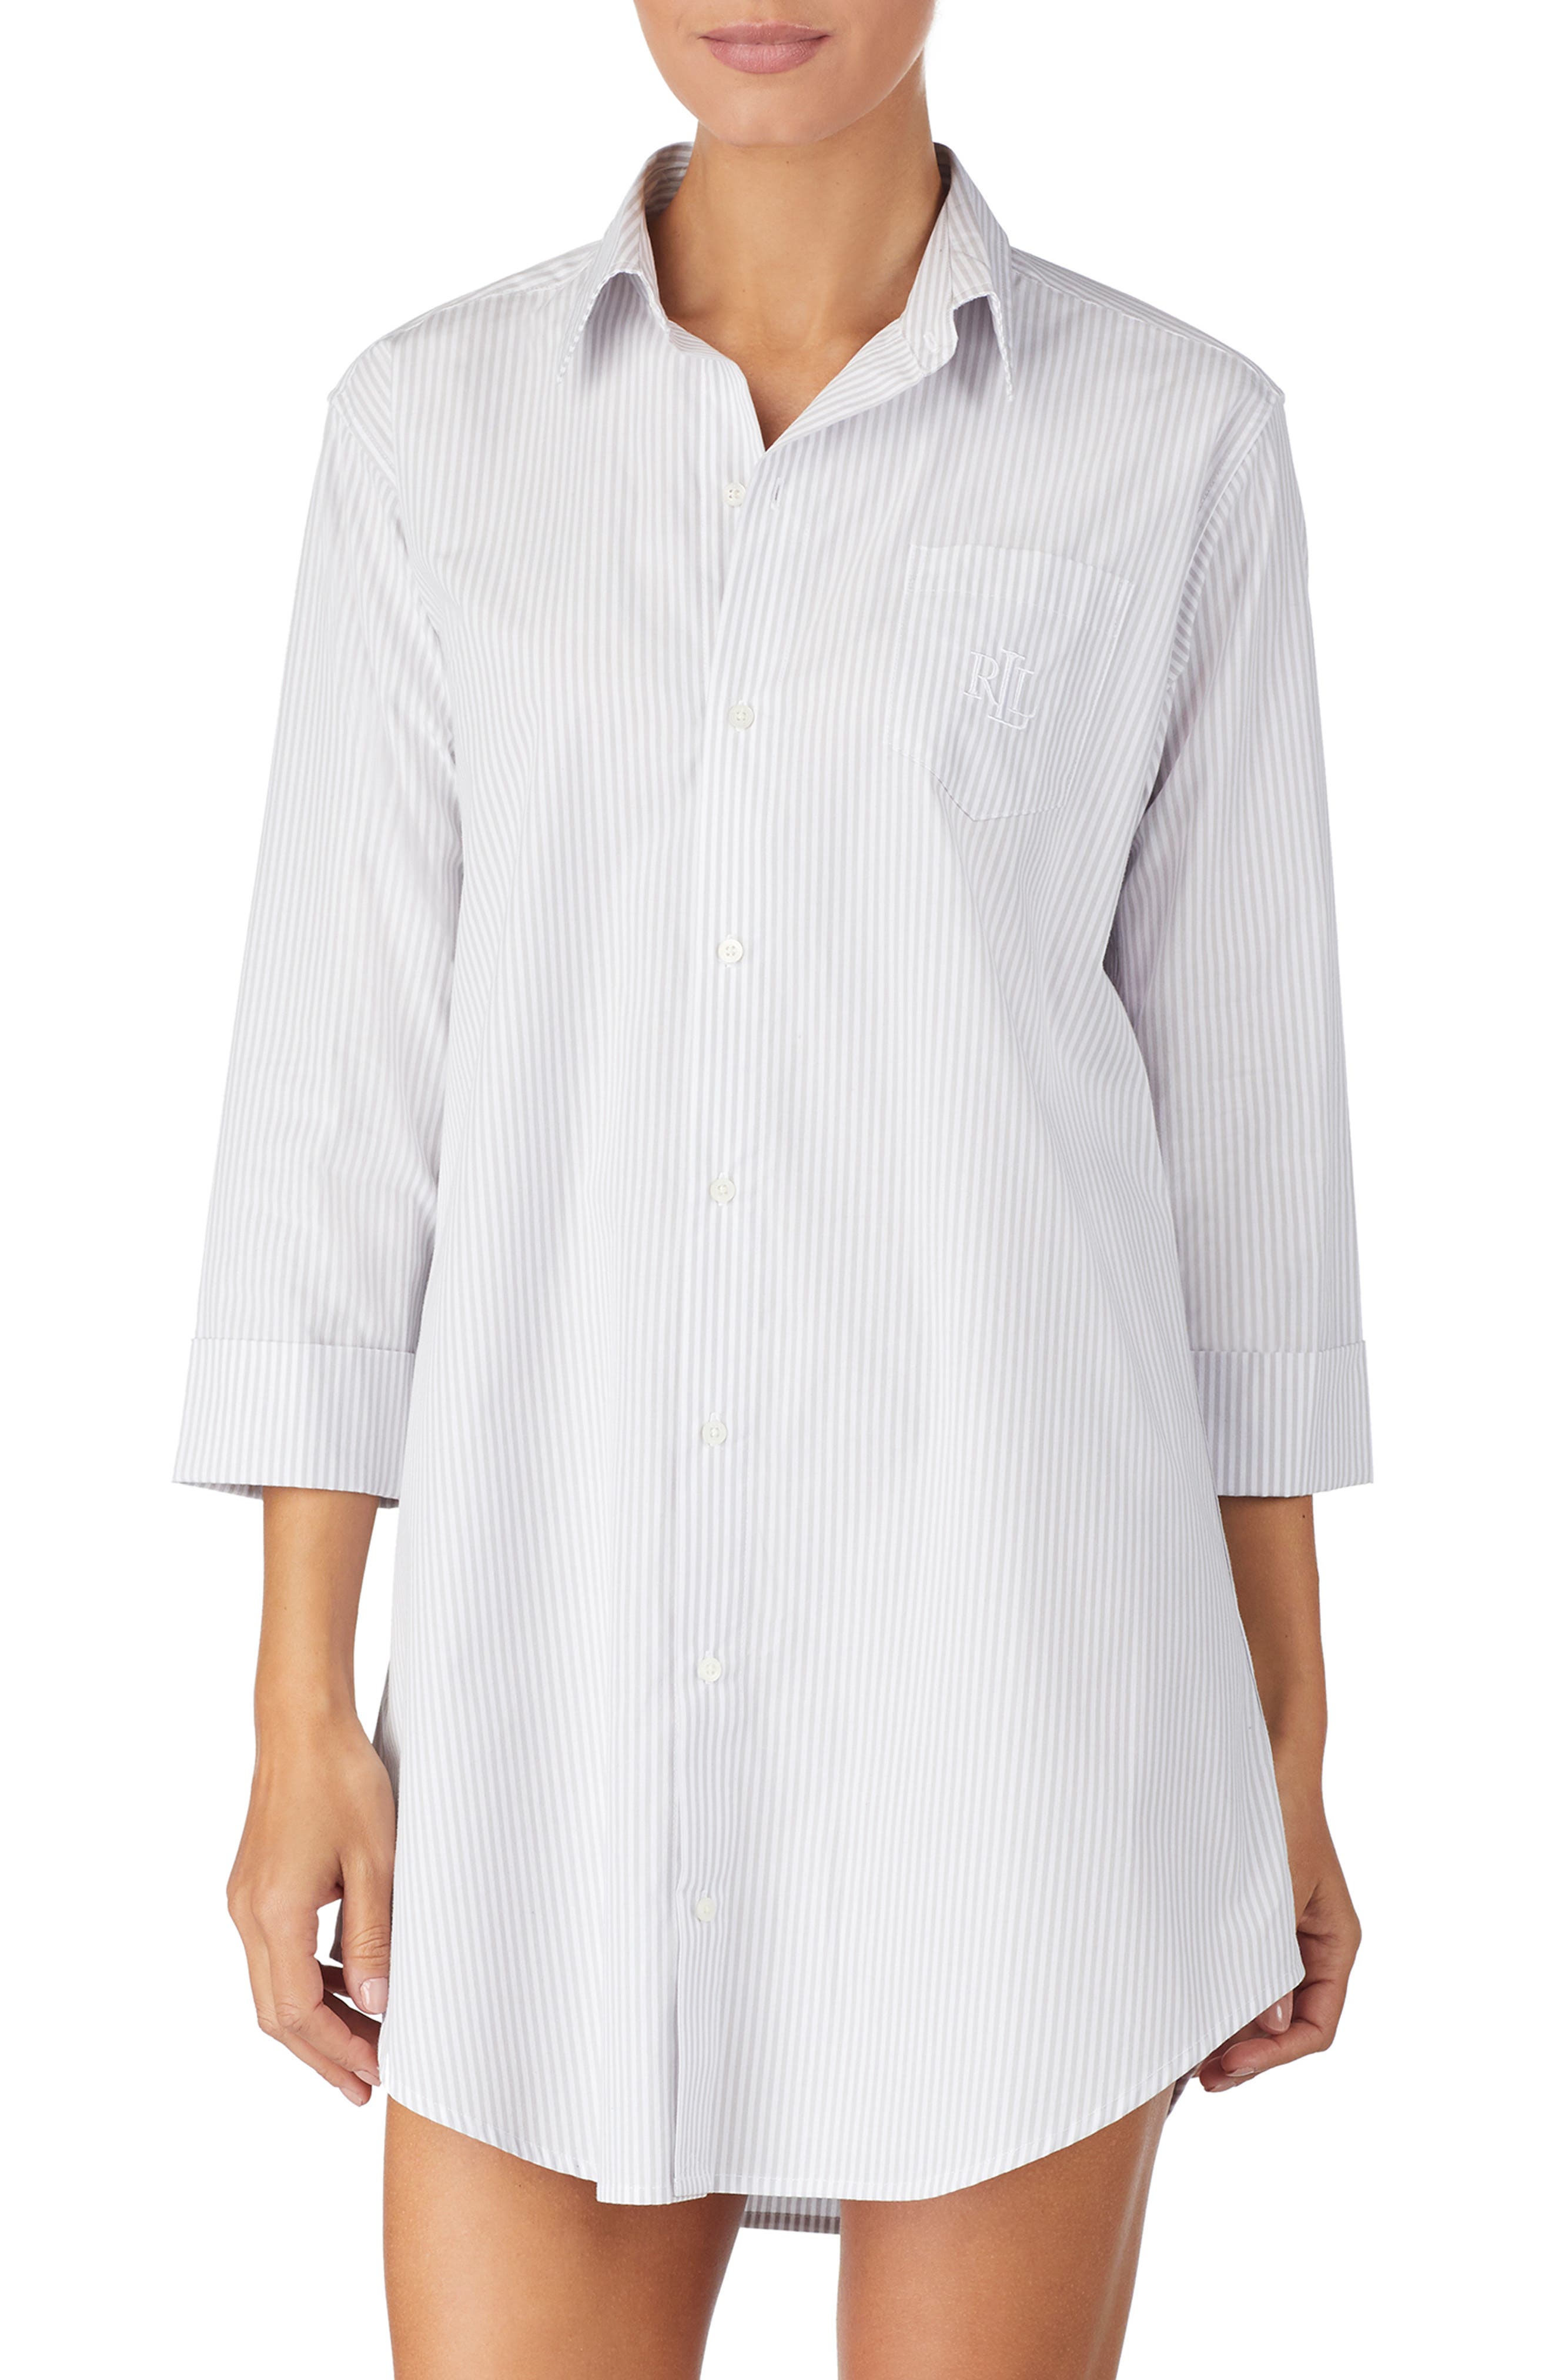 ralph lauren nightgown cotton